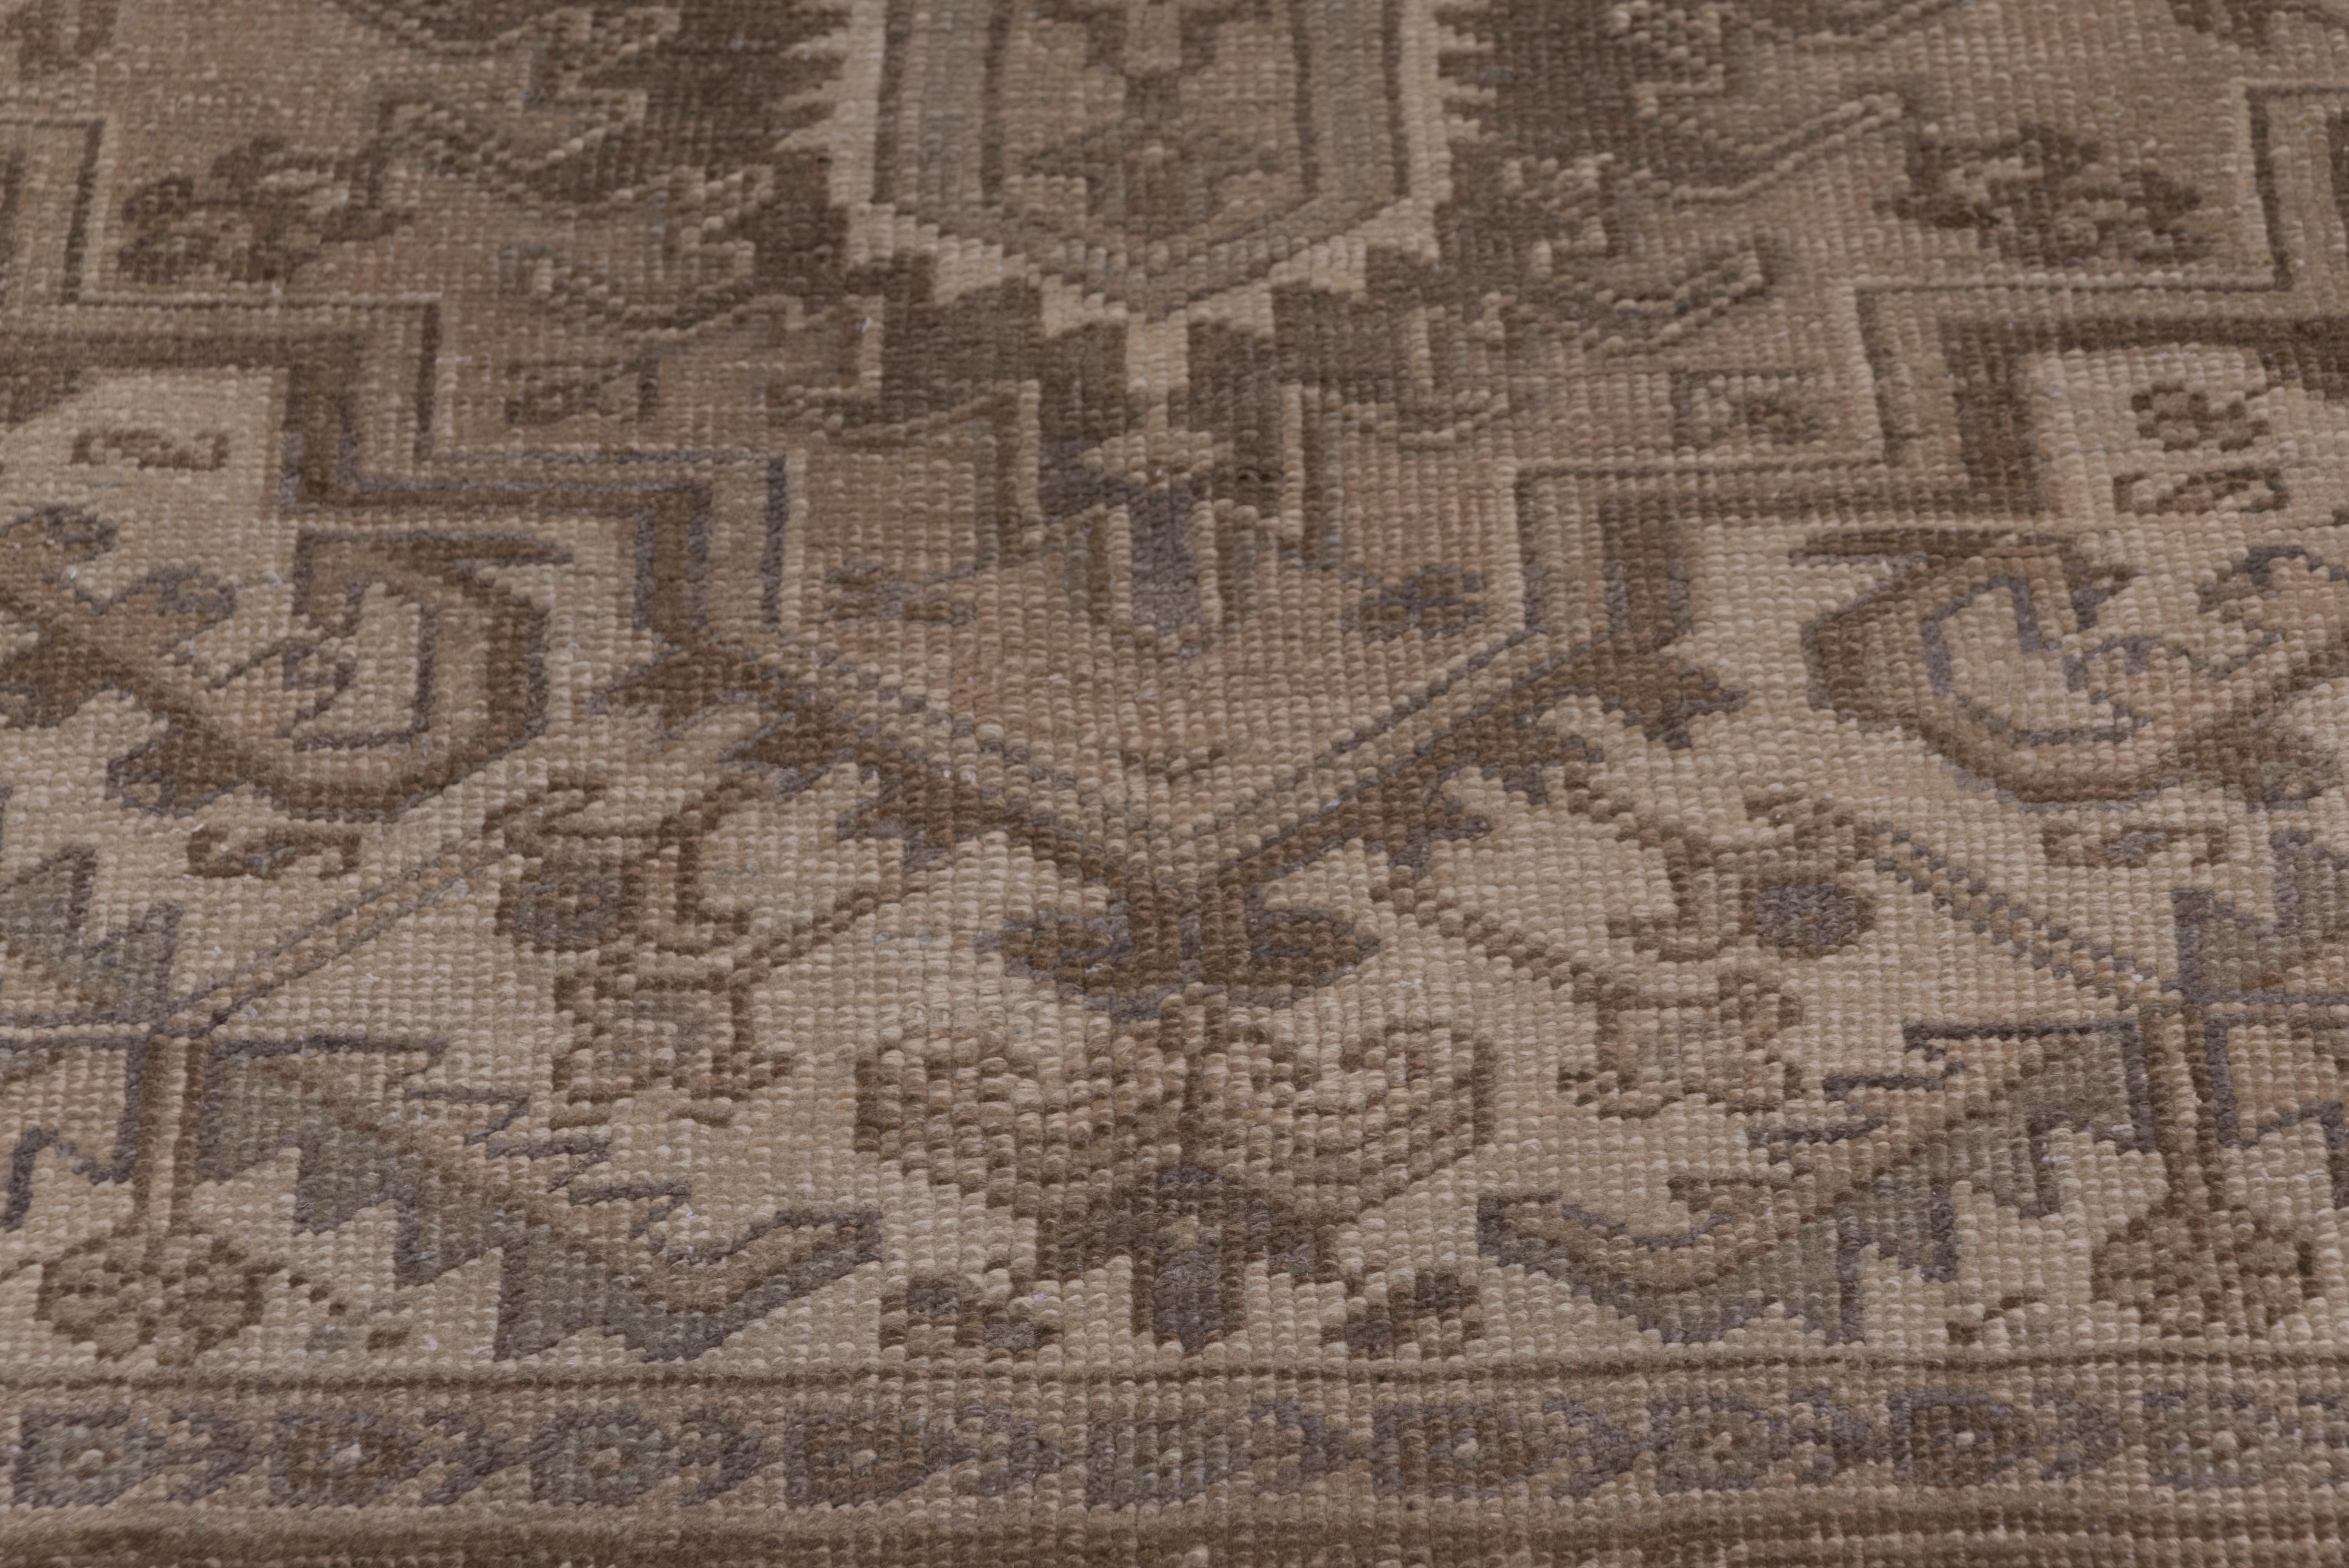 Wool Antique Heriz Carpet with Neutral Palette, circa 1910s